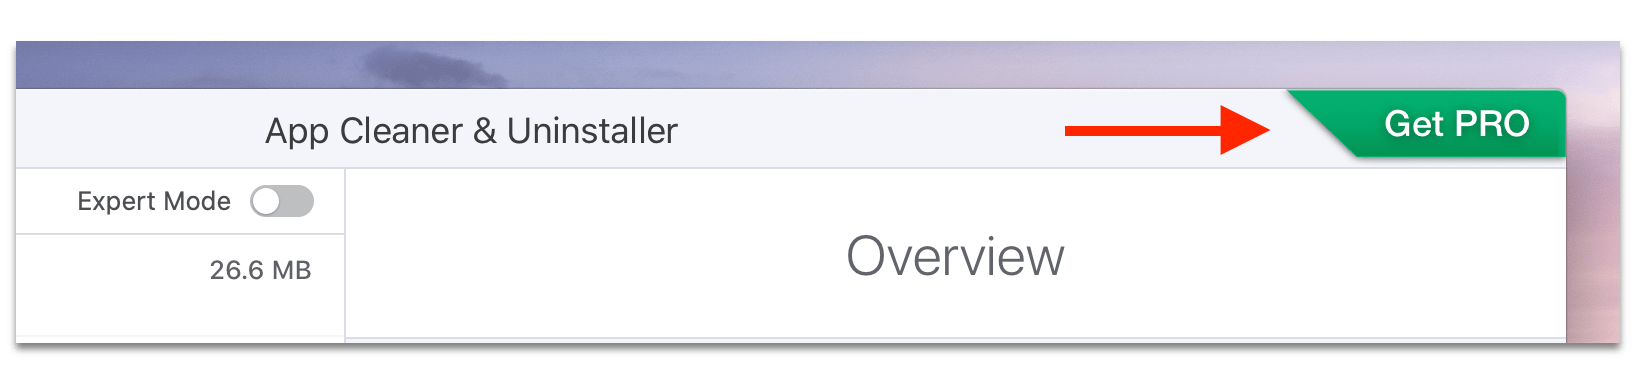 get pro button in app cleaner uninstaller window